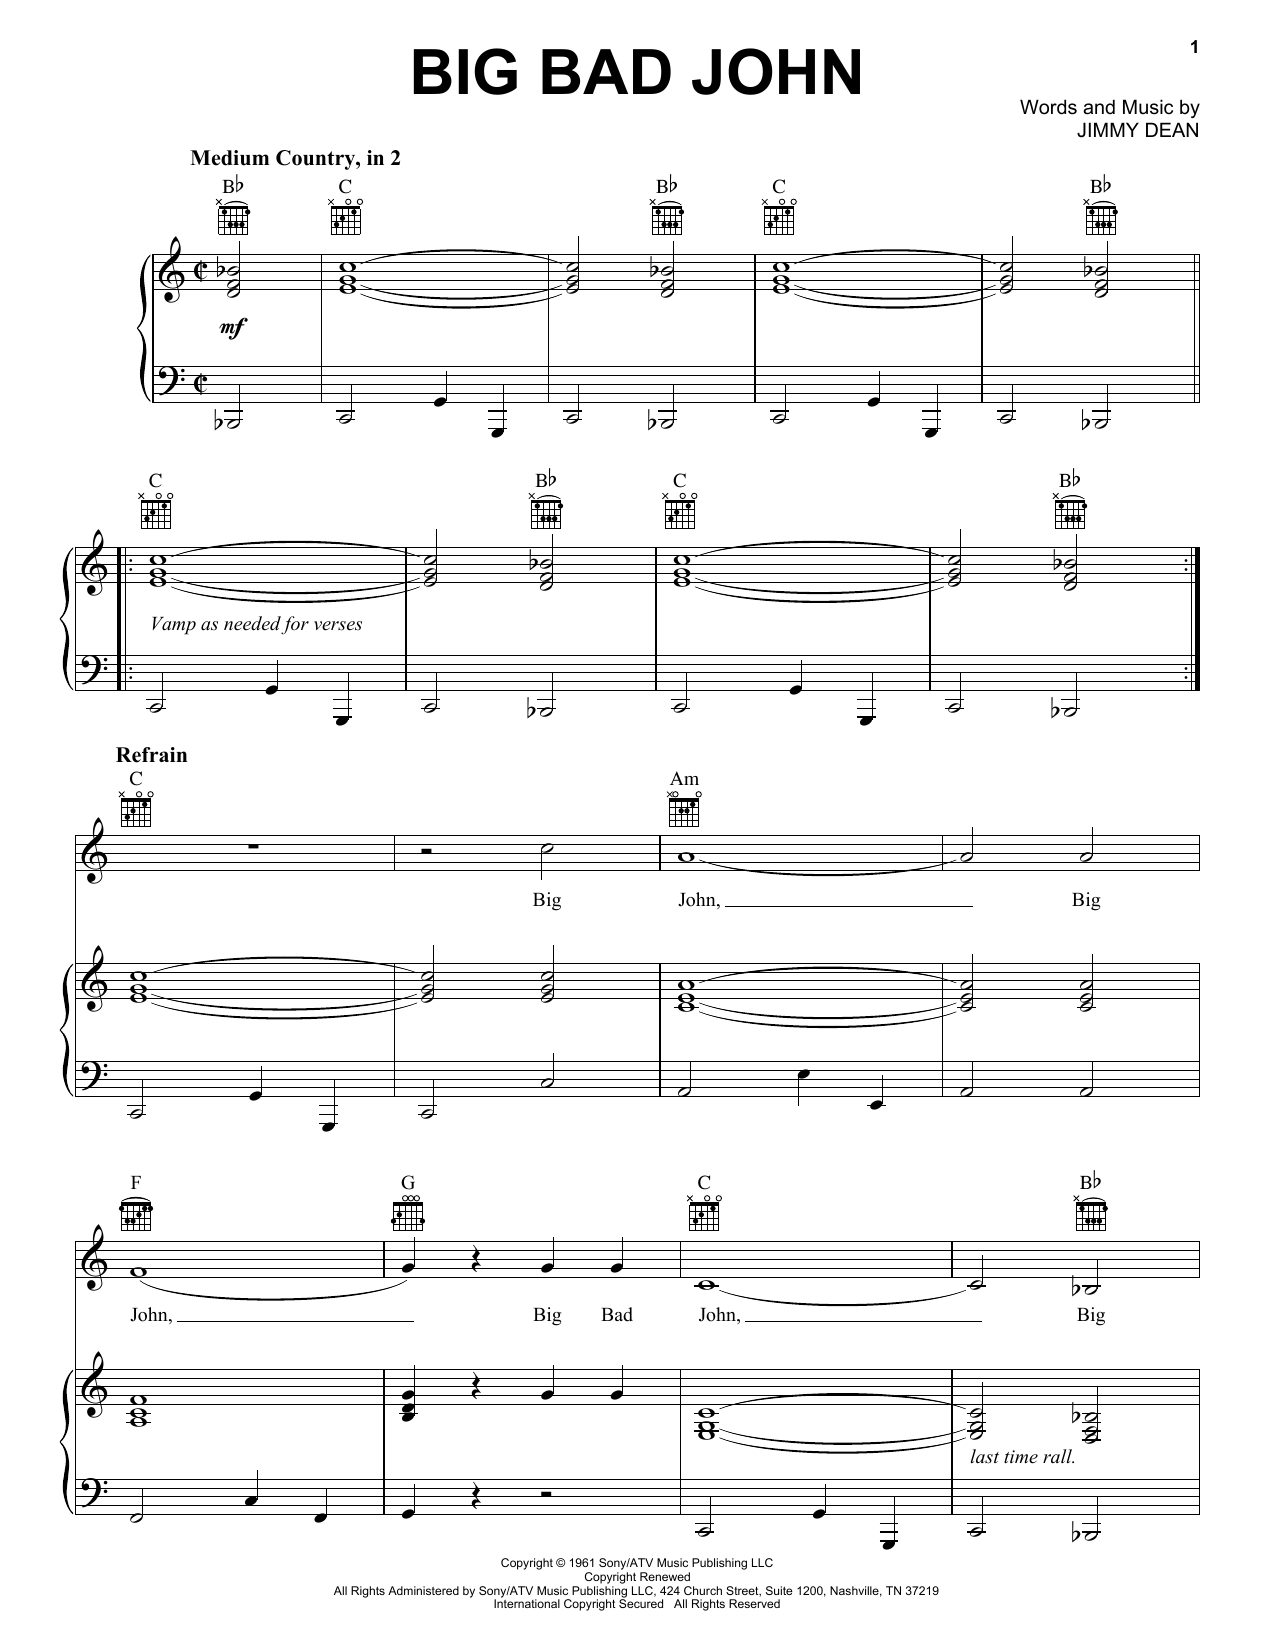 Jimmy Dean Big Bad John Sheet Music Notes & Chords for Lyrics & Chords - Download or Print PDF